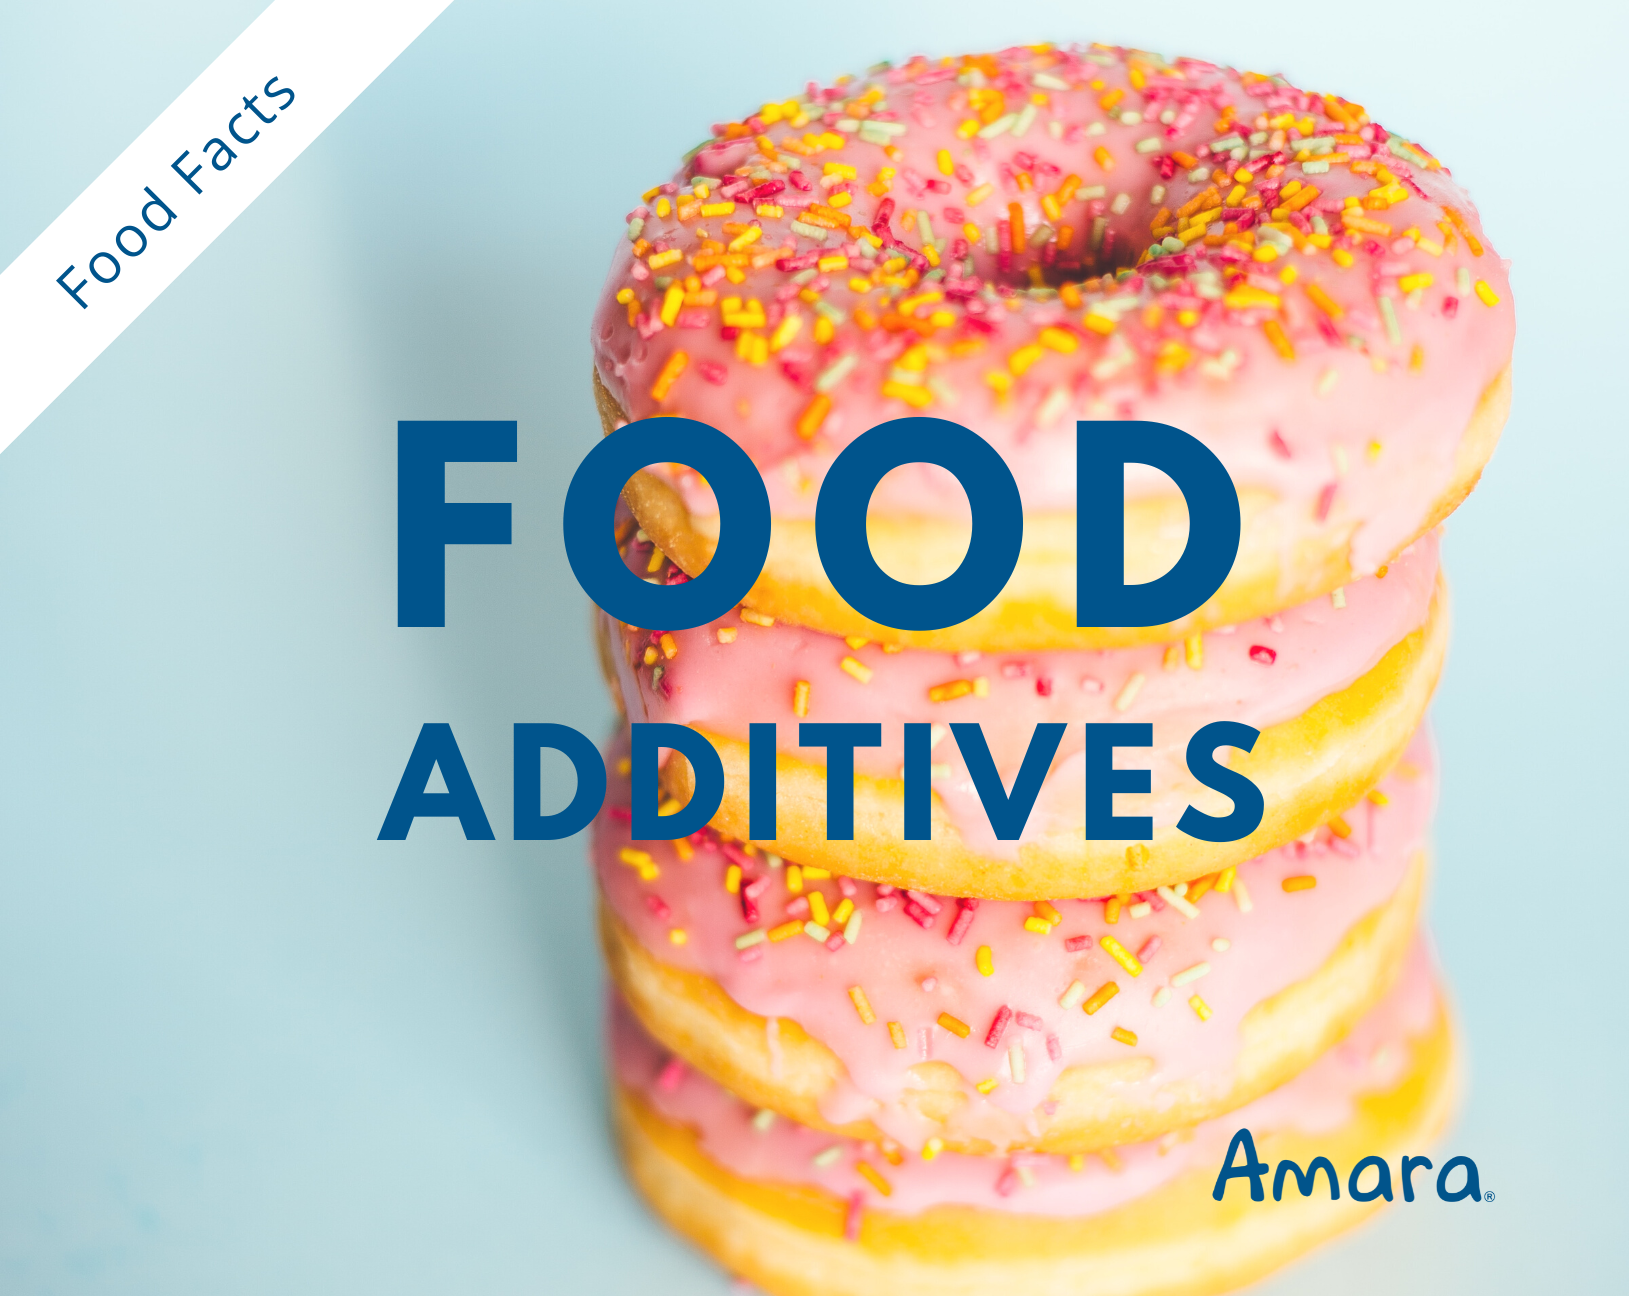 A Deep Dive into Food Additives